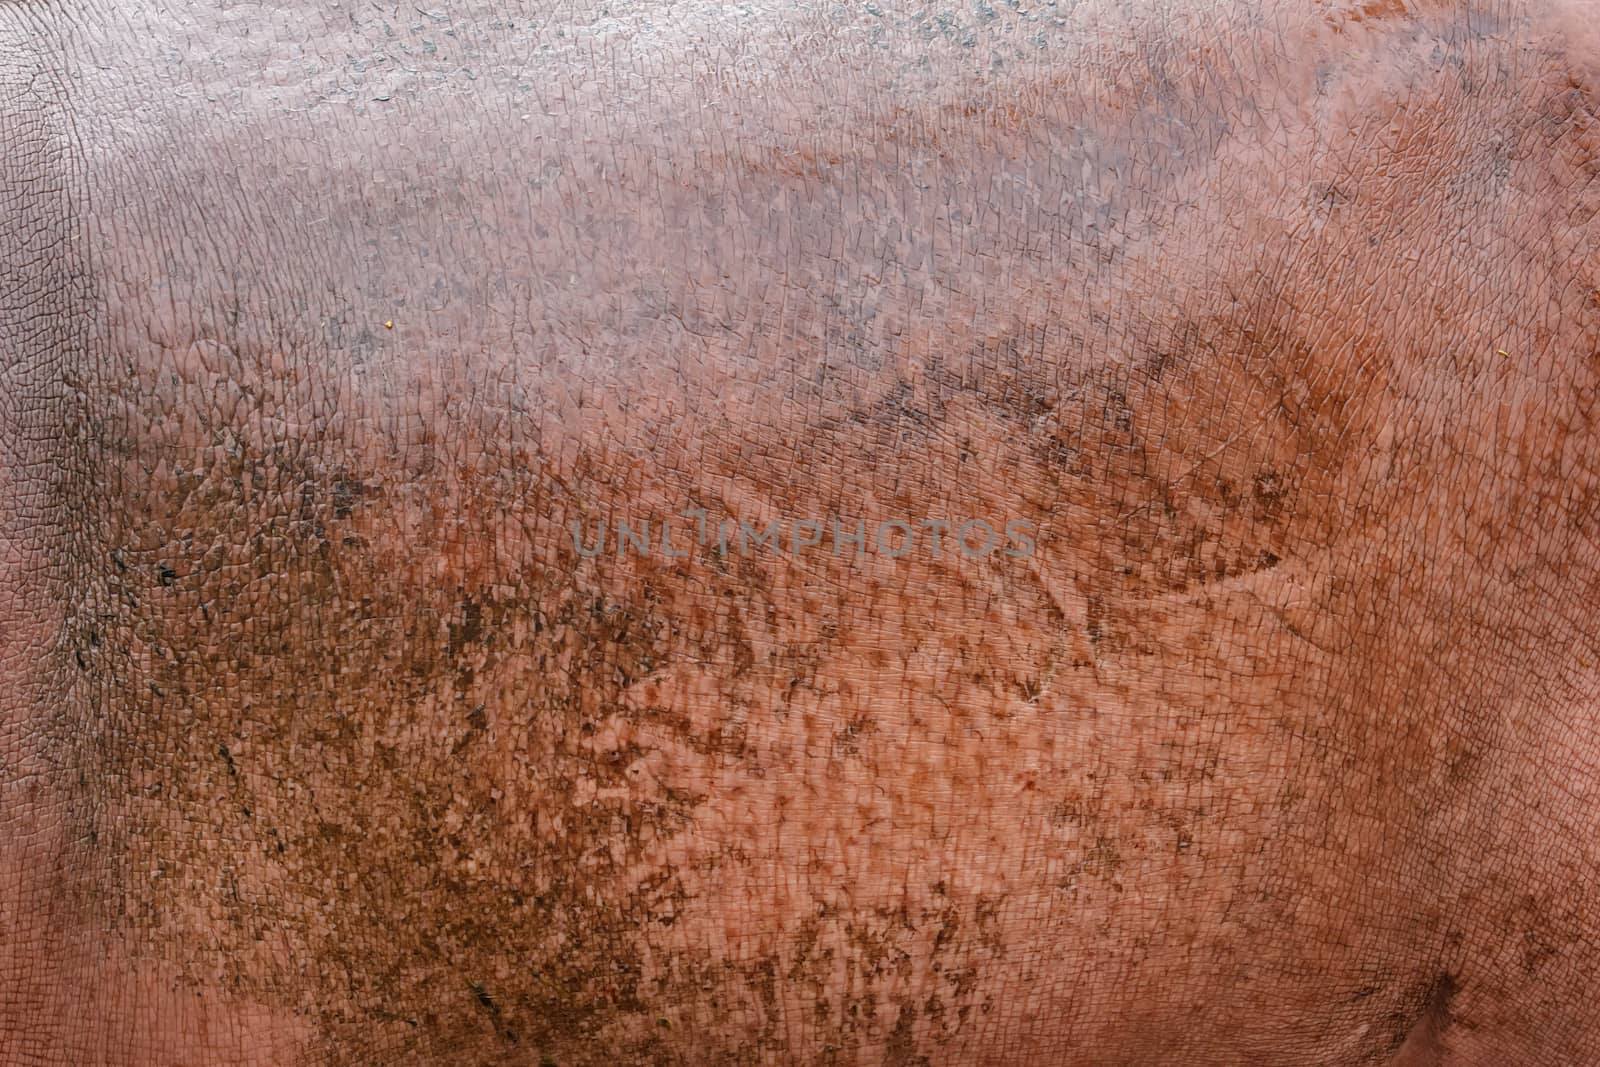 hippopotamus skin texture for background